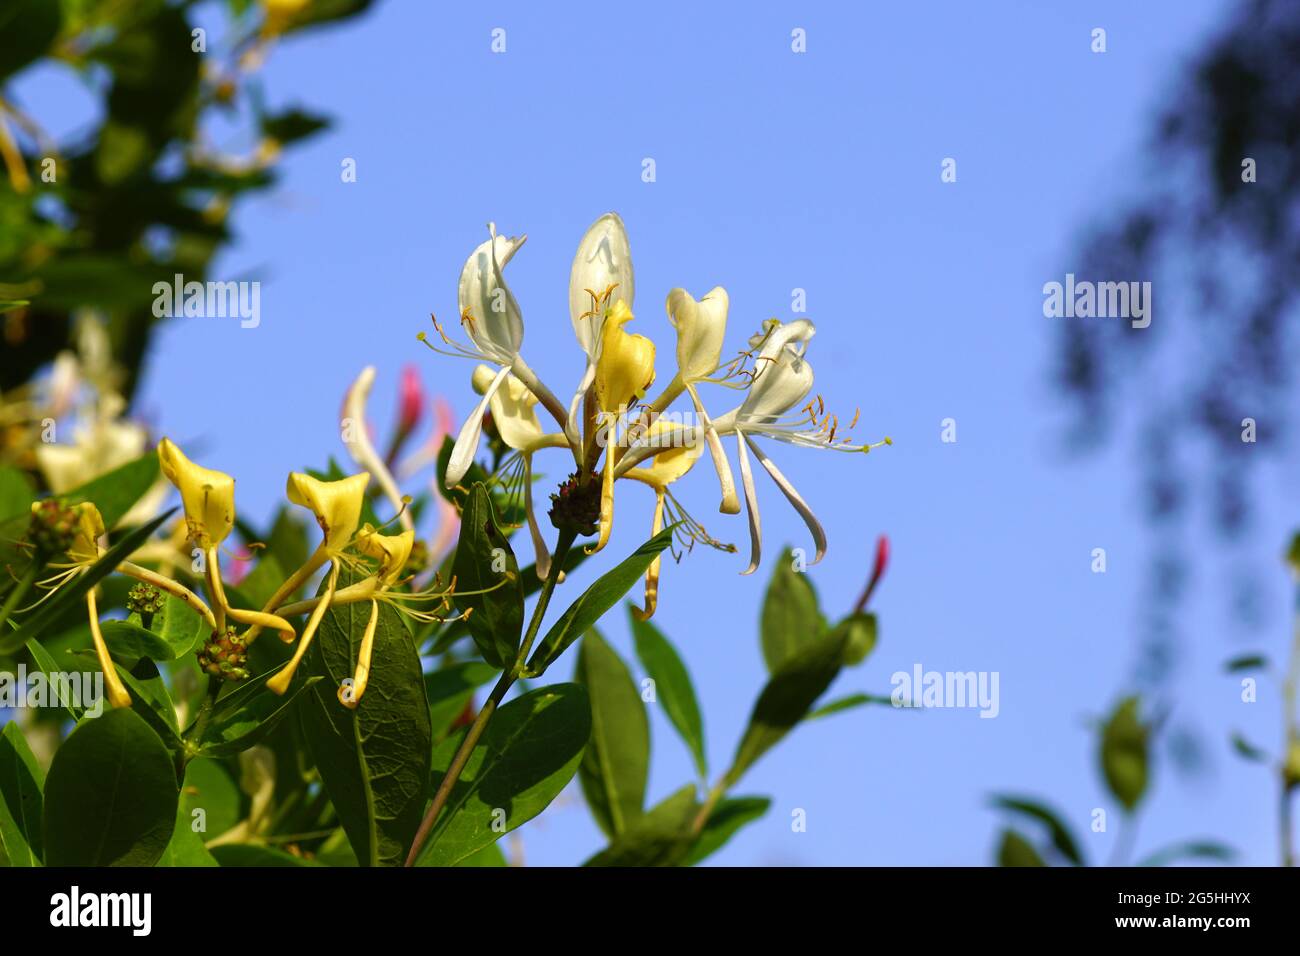 Flowering Lonicera periclymenum, common names honeysuckle, common honeysuckle, European honeysuckle, or woodbine. Family Caprifoliaceae. Dutch garden Stock Photo